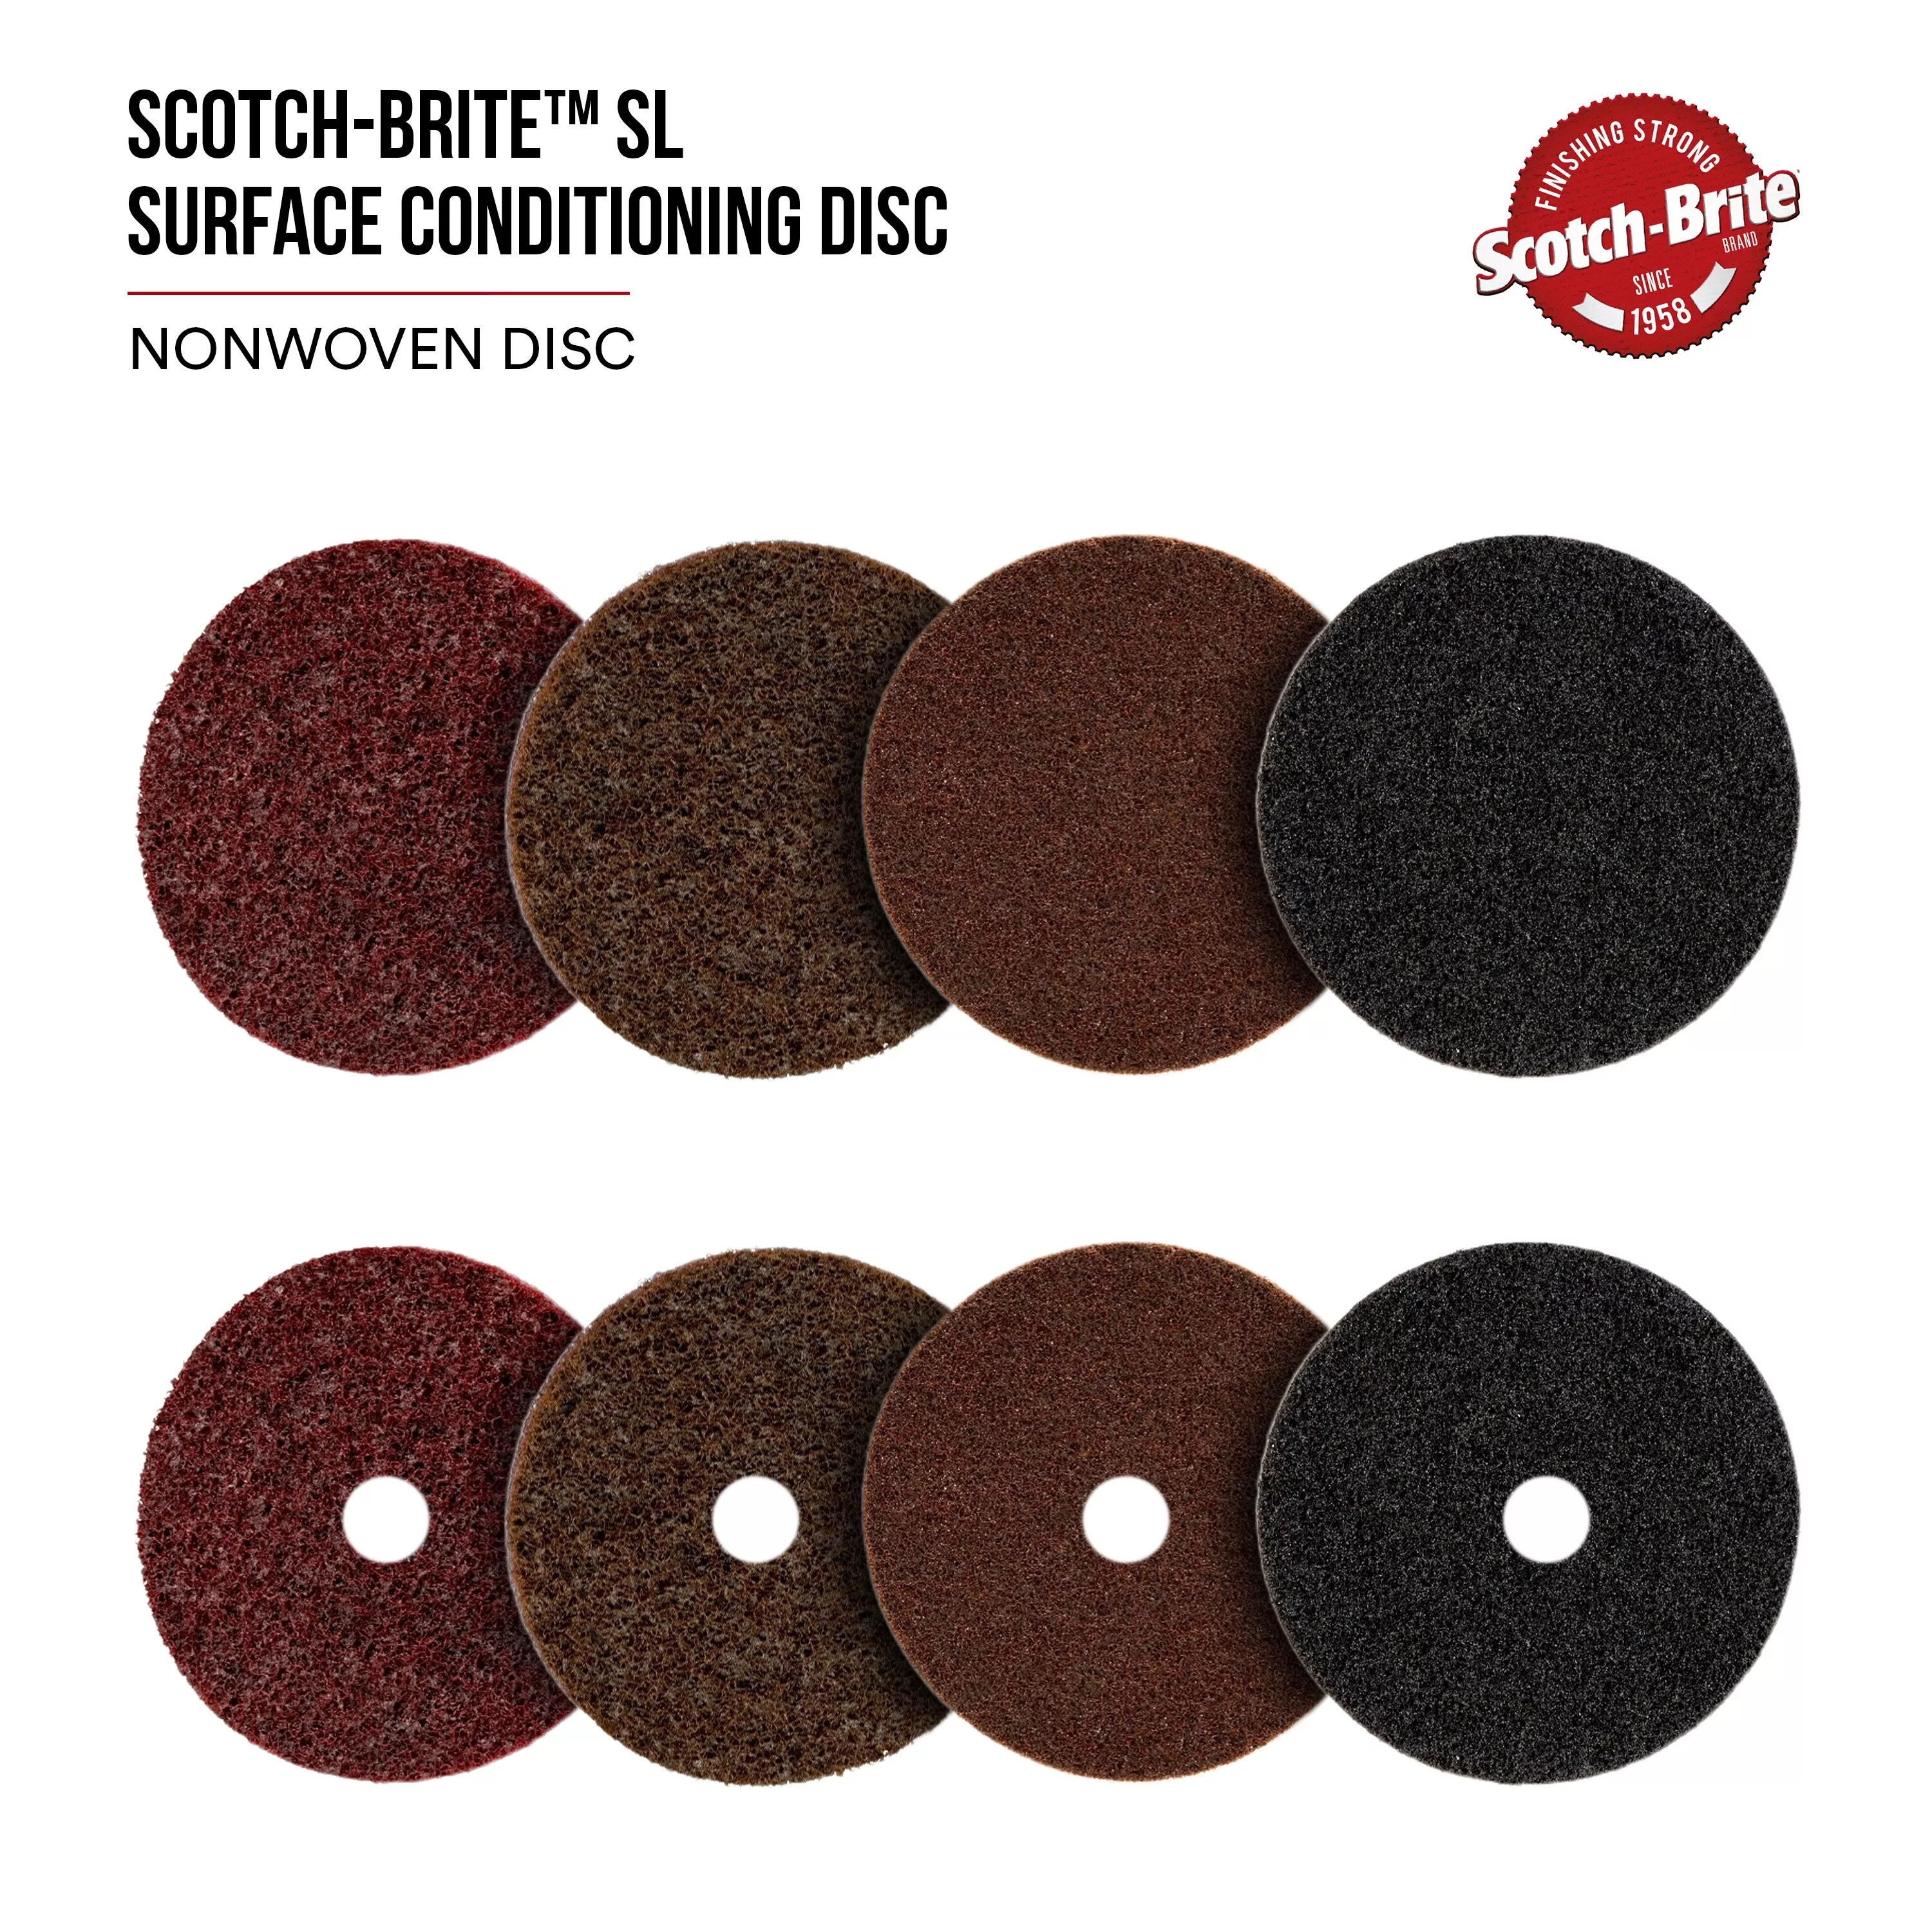 SKU 7000144155 | Scotch-Brite™ SL Surface Conditioning Disc